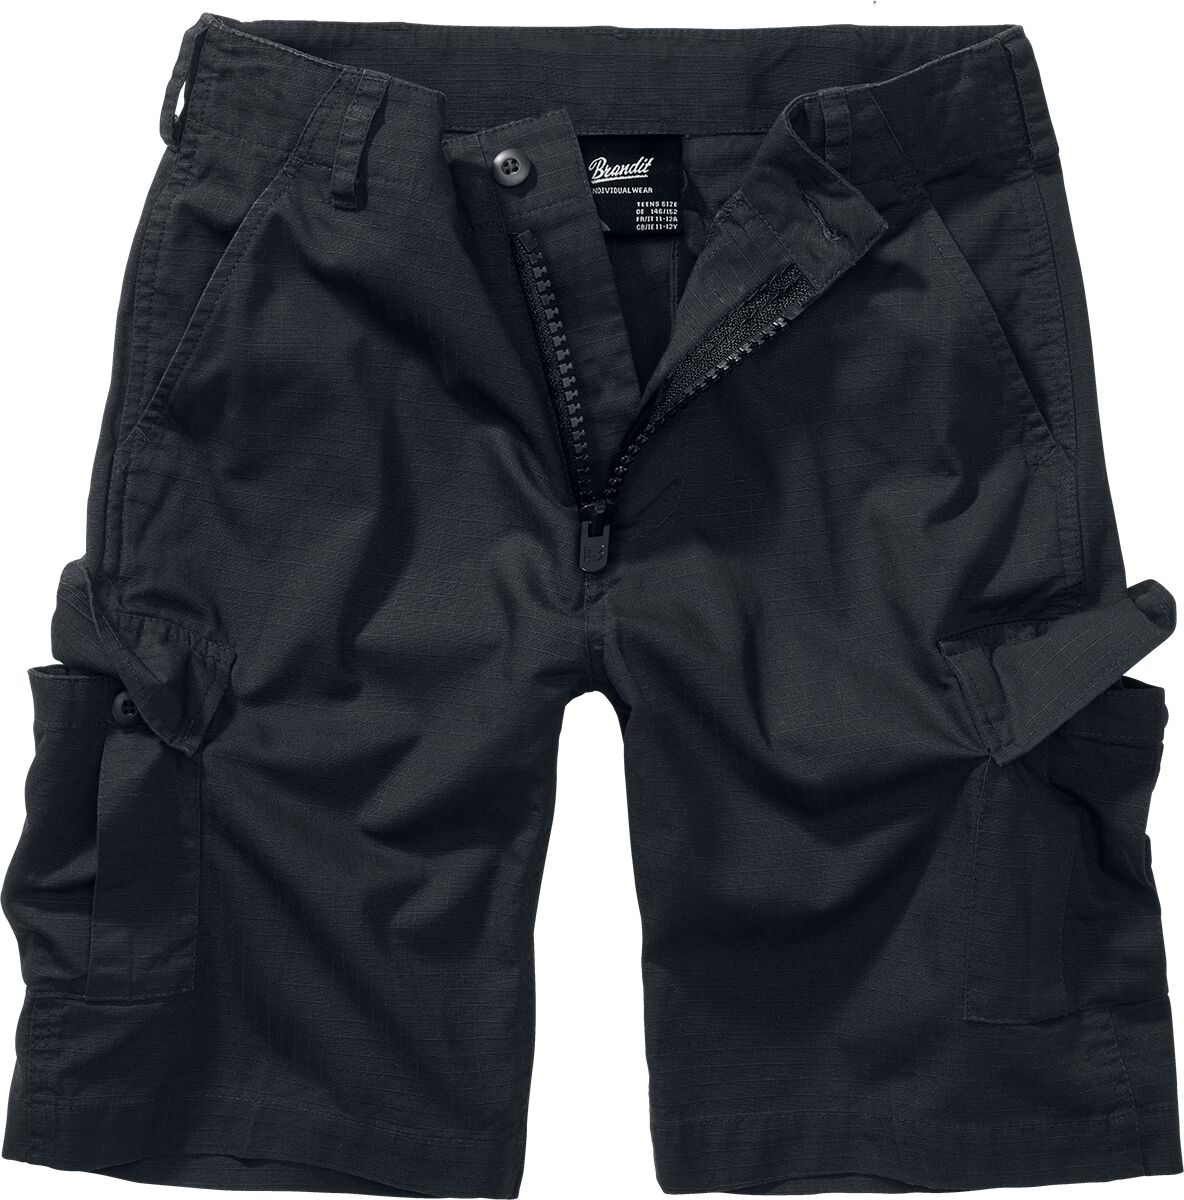 Brandit Kids BDU Ripstop Shorts Short schwarz in 122/128